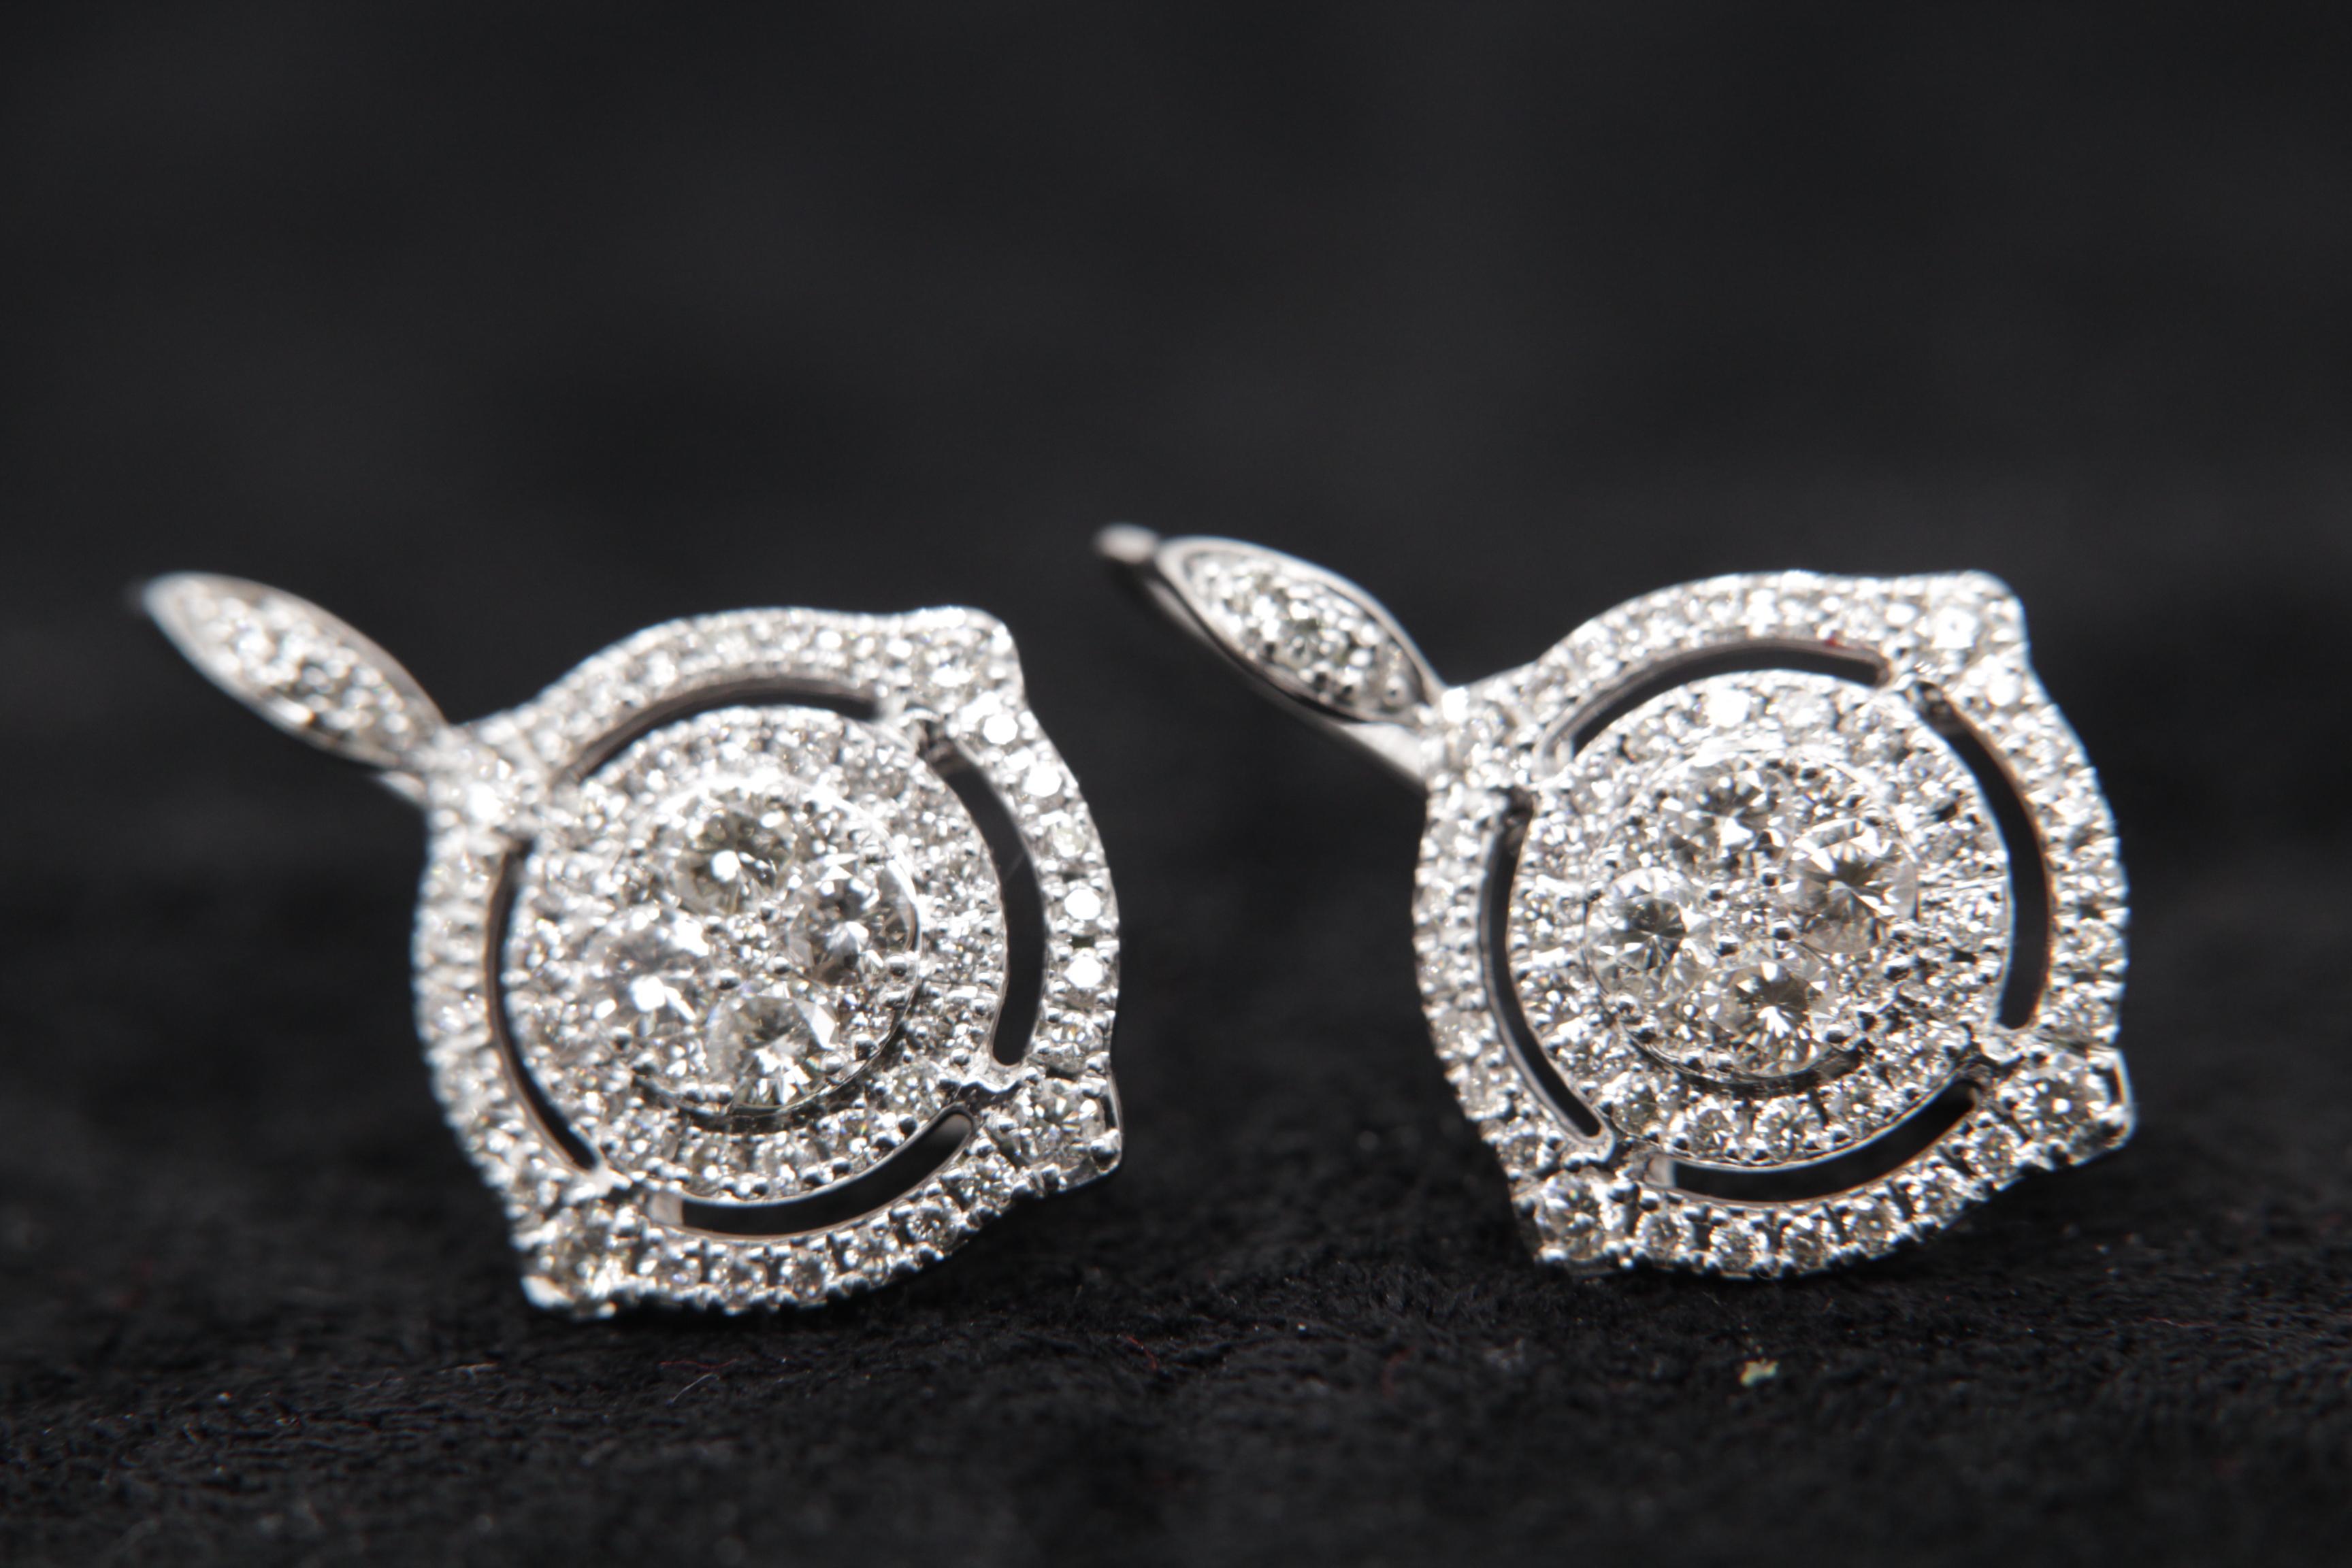 A brand new diamond earring in 18 karat gold. The total diamond weight is 1.43 carat and total earring weight is 5.31 grams.